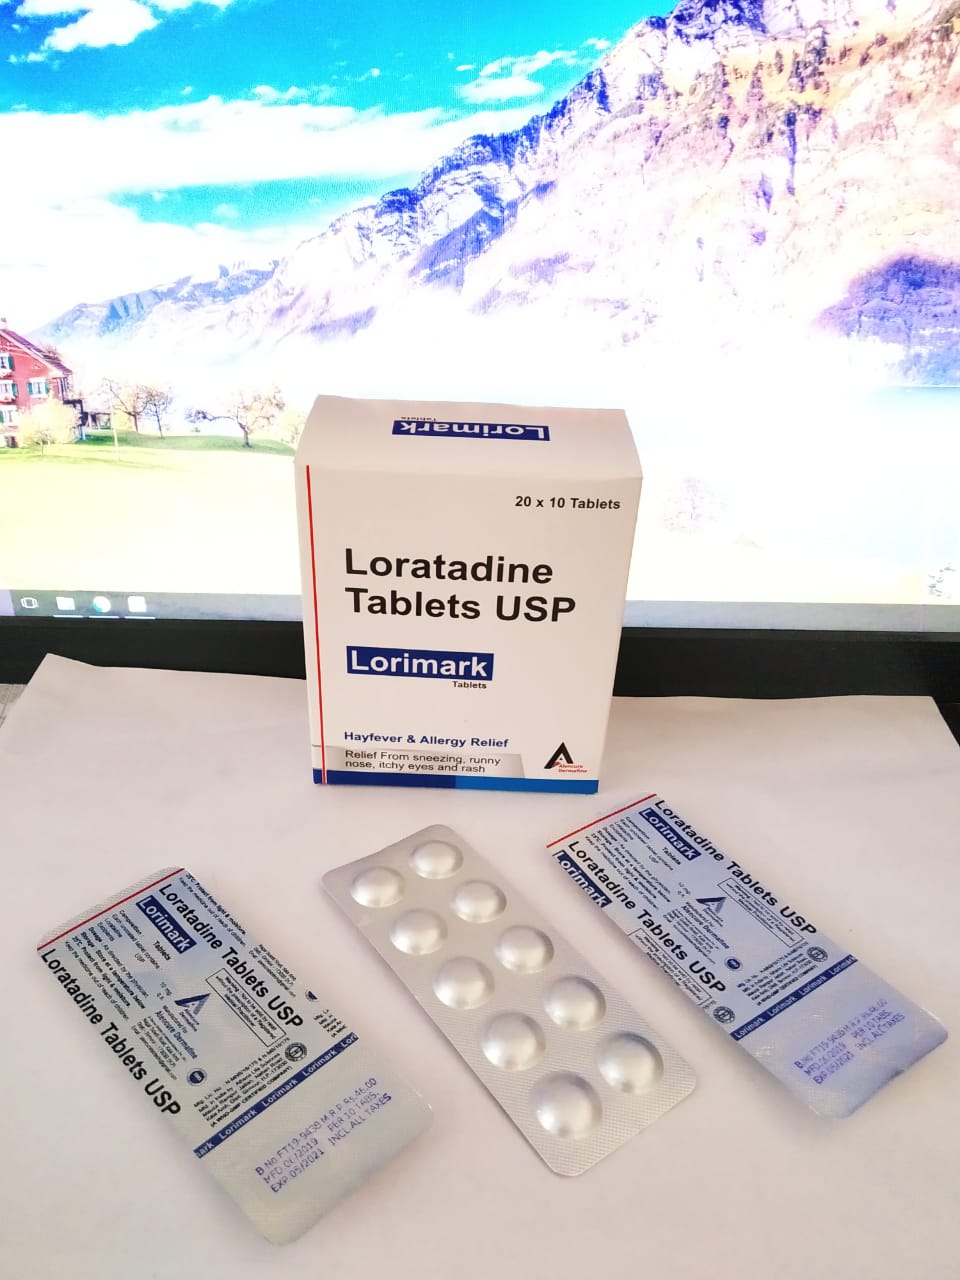 Product Name: LORIMARK, Compositions of LORIMARK are Loratadine Tablets USP - Alencure Biotech Pvt Ltd